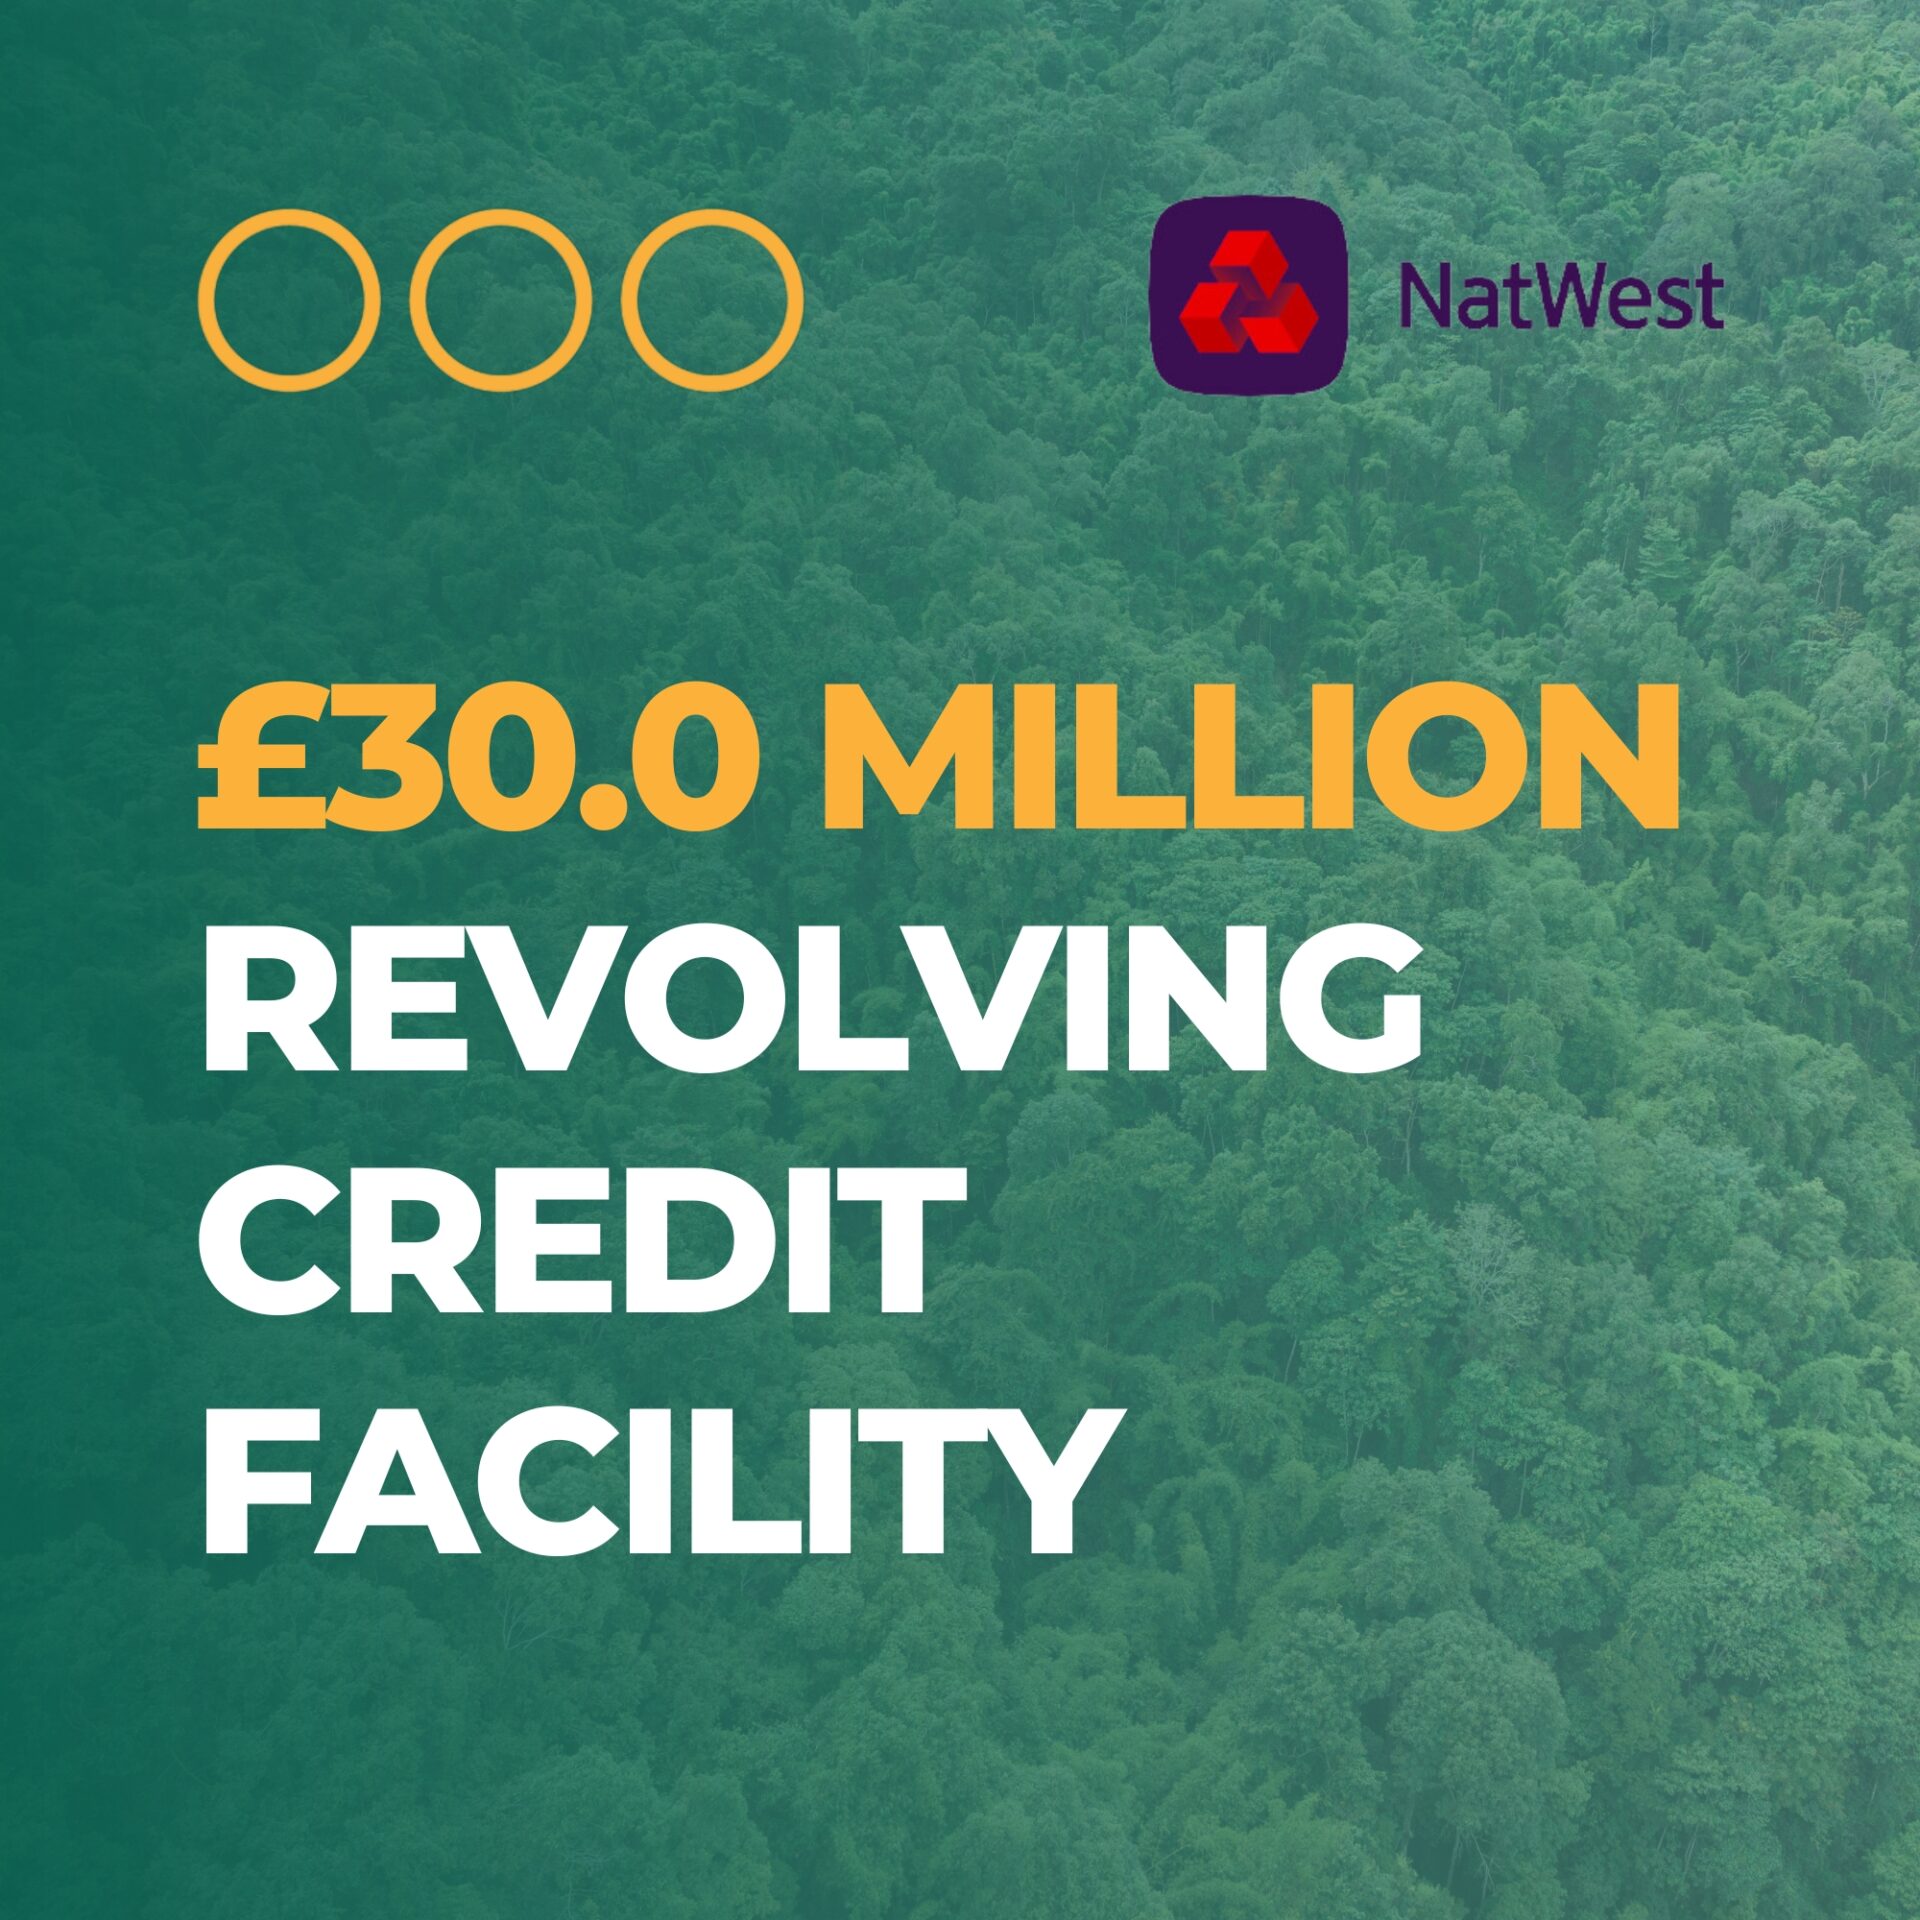 £30.0 Million NatWest revolving credit facility